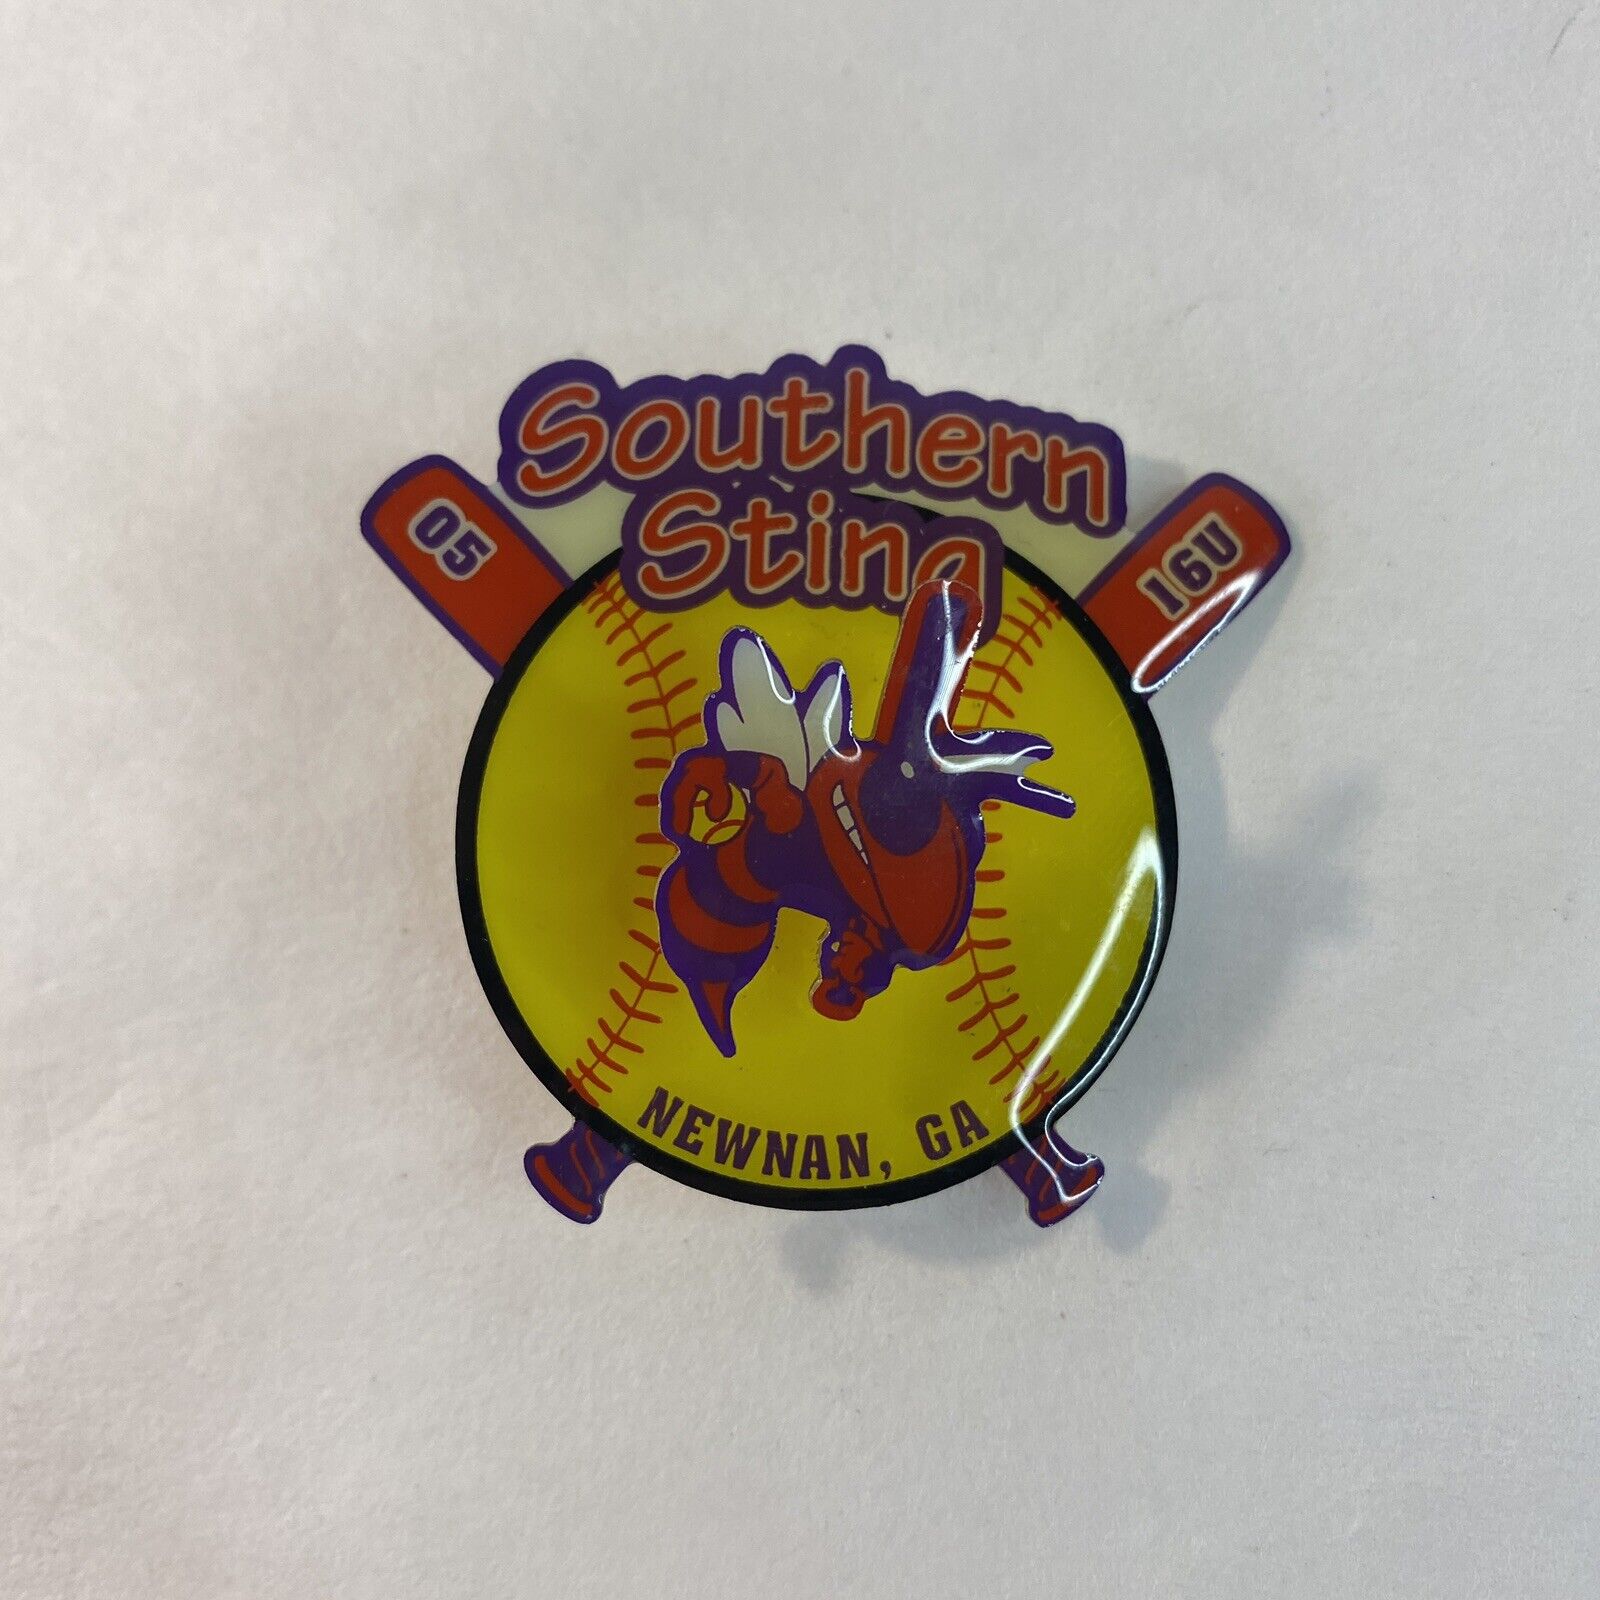 Southern Sting 05 16U Newman GA Fastpitch Softball Collectible Trading Lapel Pin